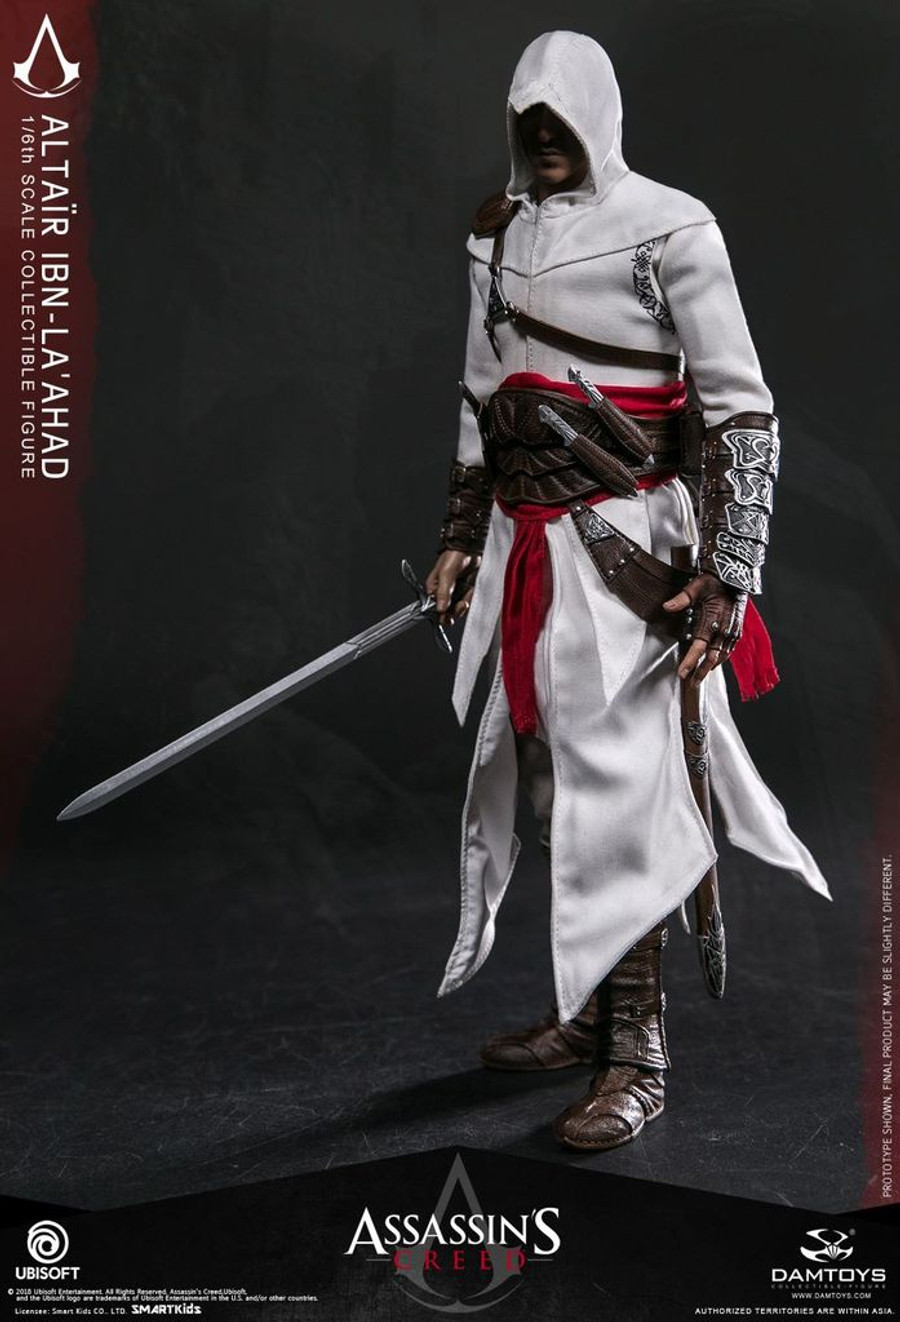 DAM Toys - Assassin's Creed: Altaïr the Mentor